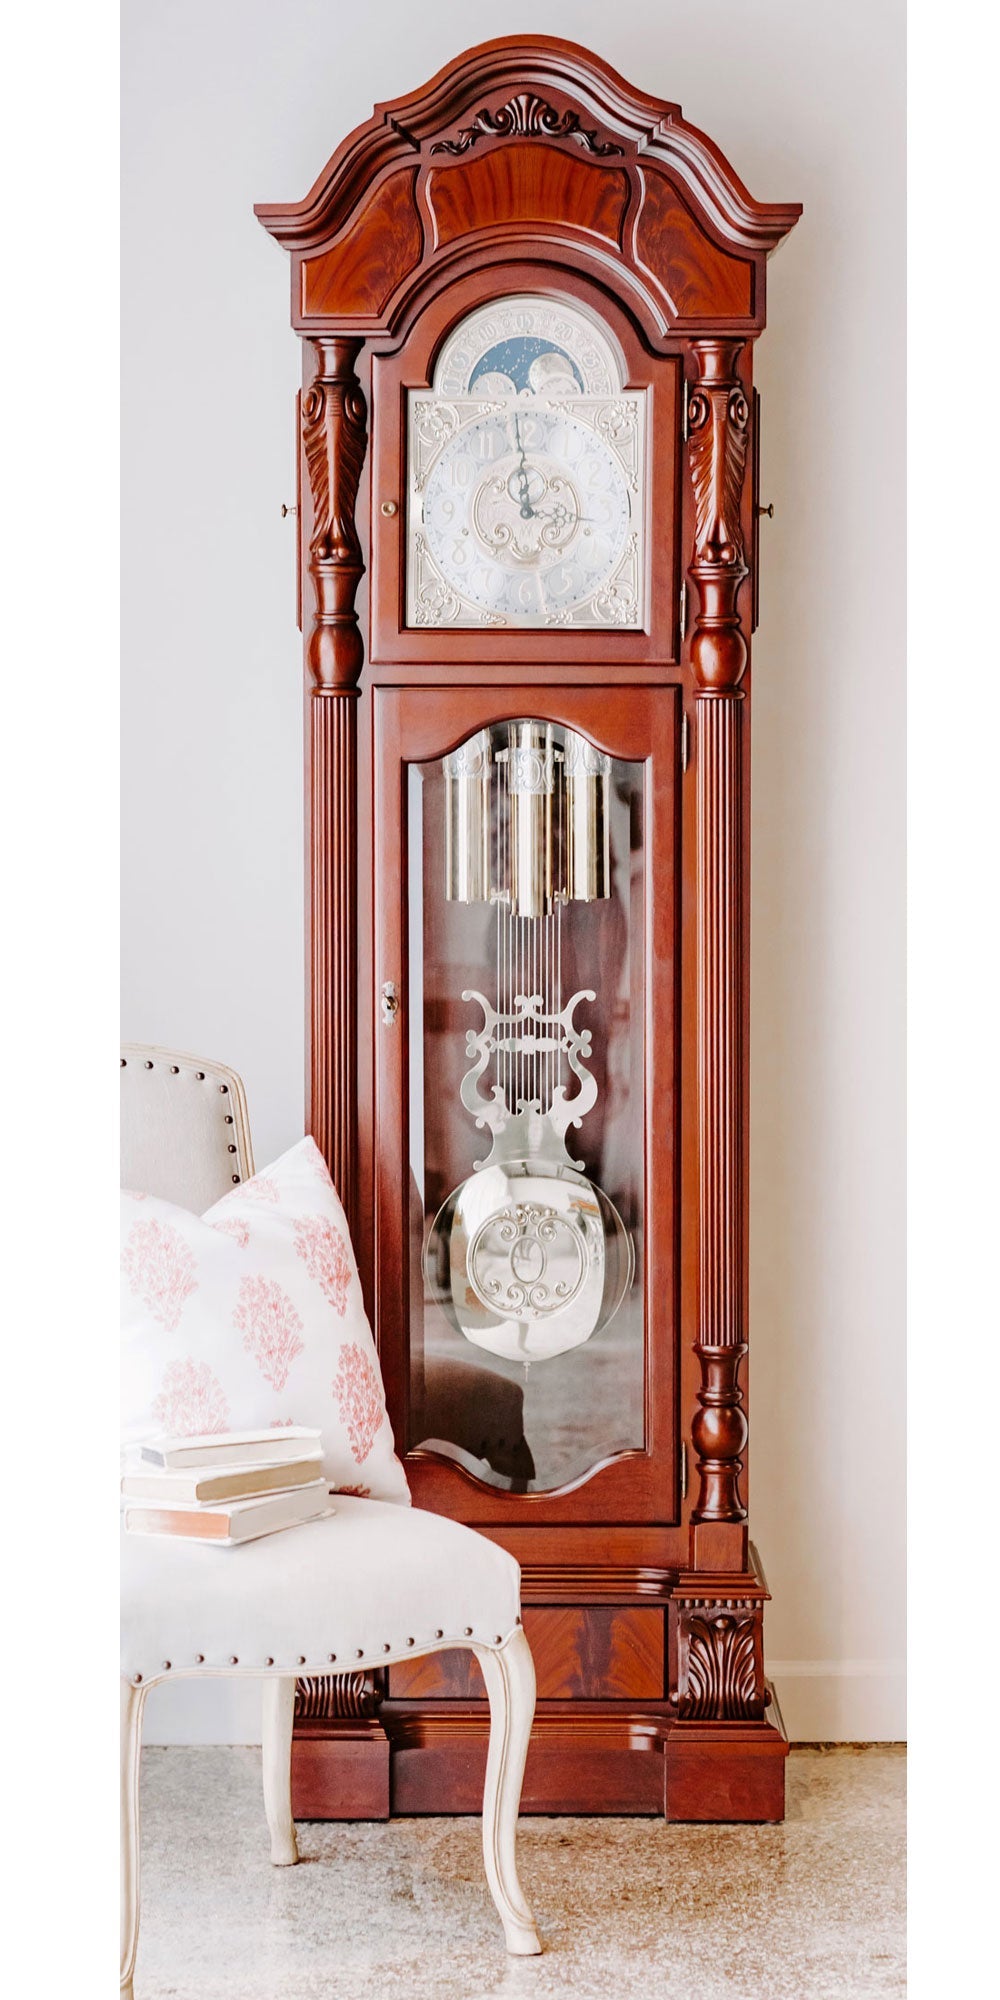 Anstead Tubular Chimes Grandfather Clock by Hermle Clocks - Cherry